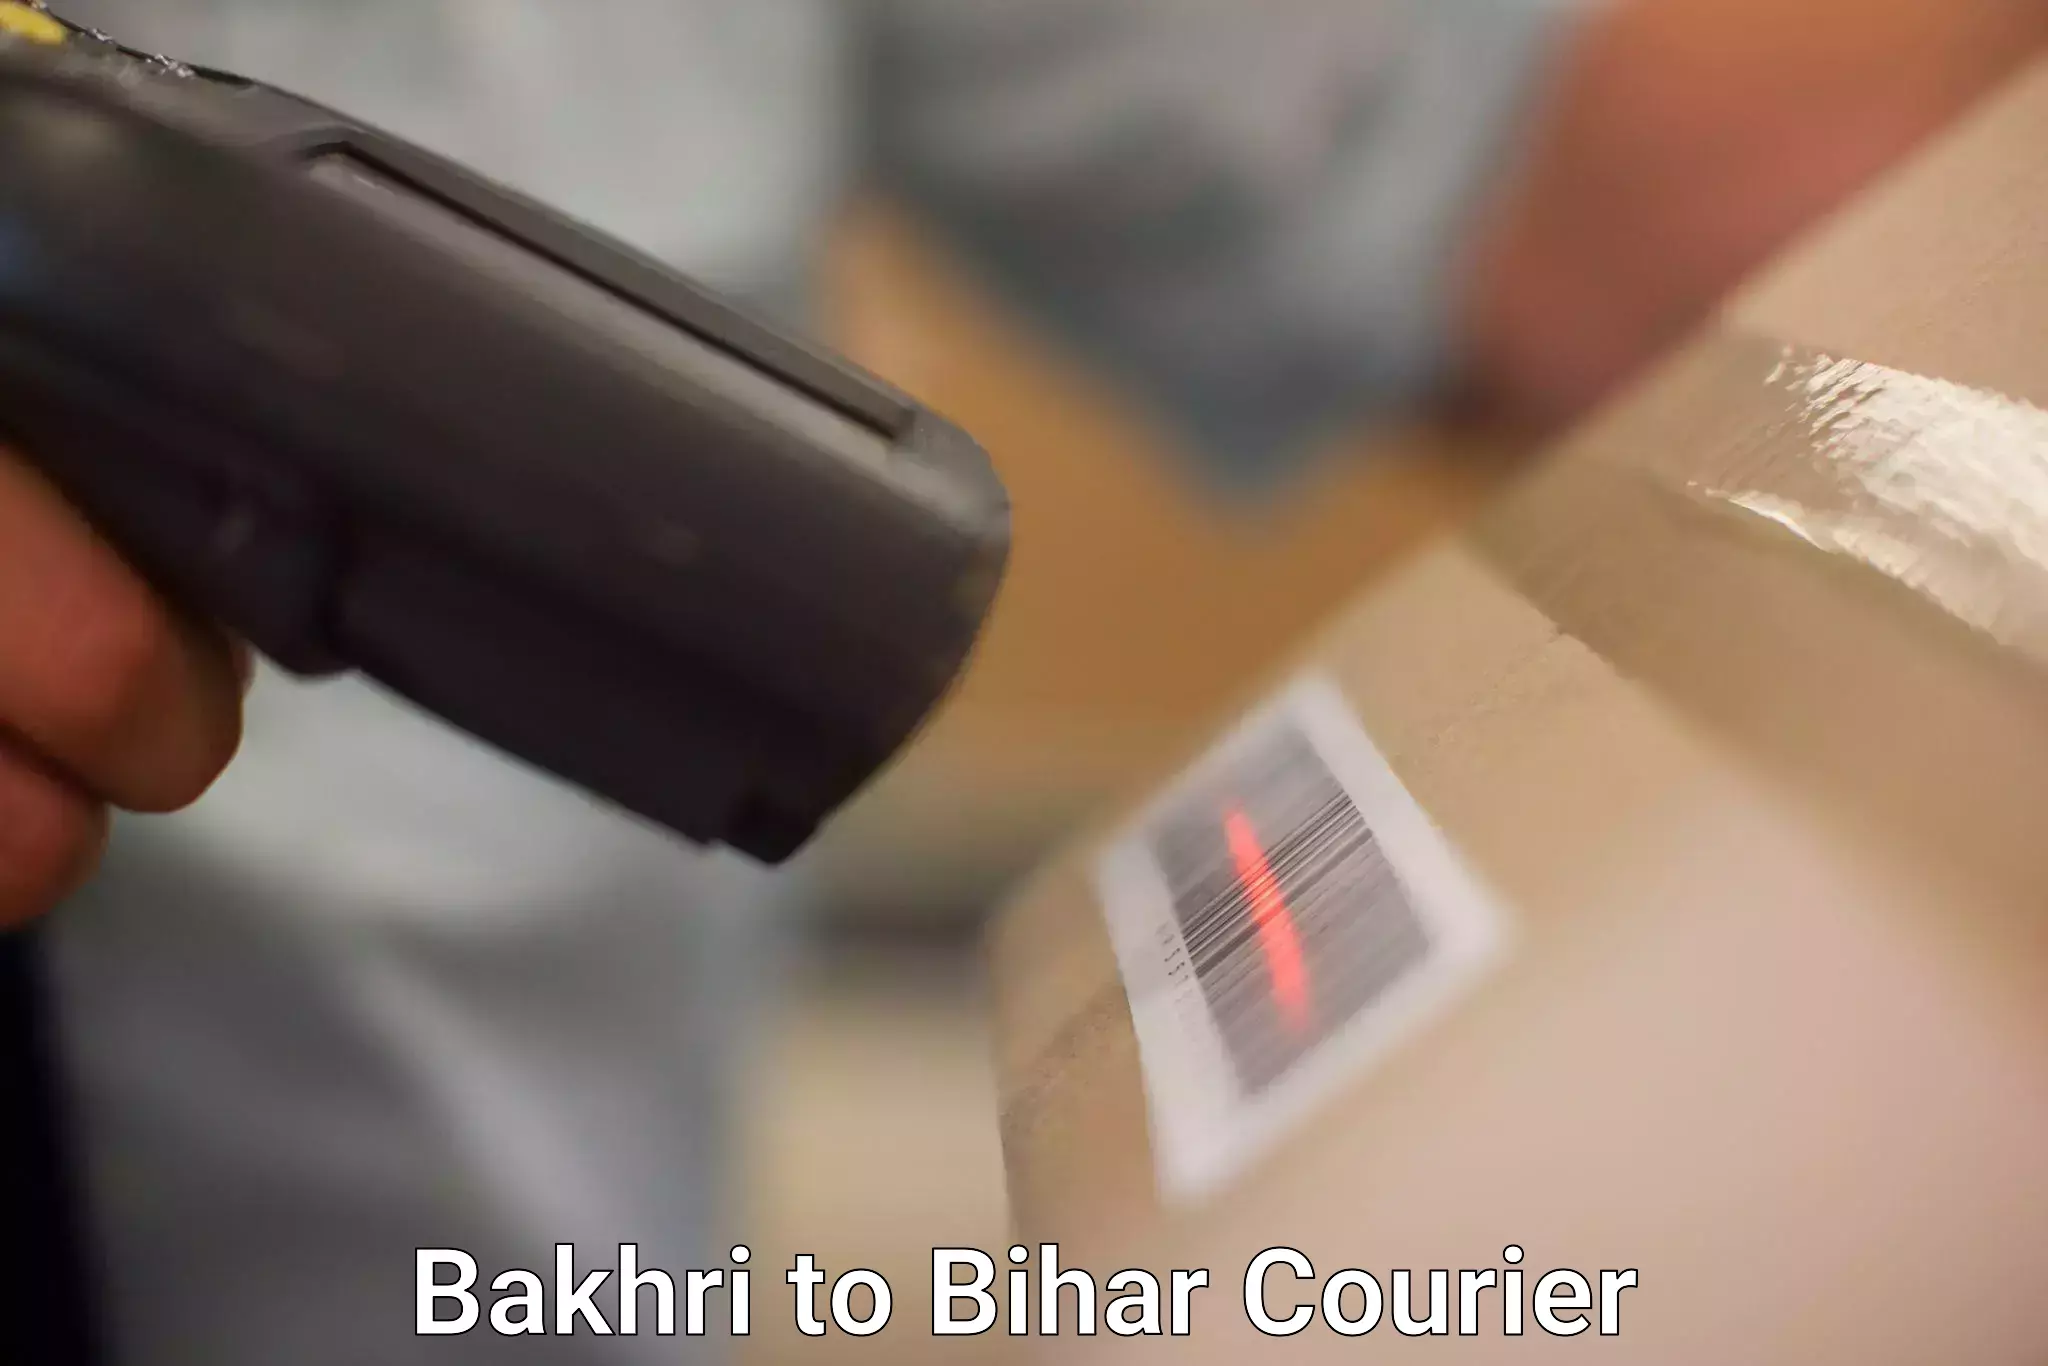 Cargo delivery service Bakhri to Bihar